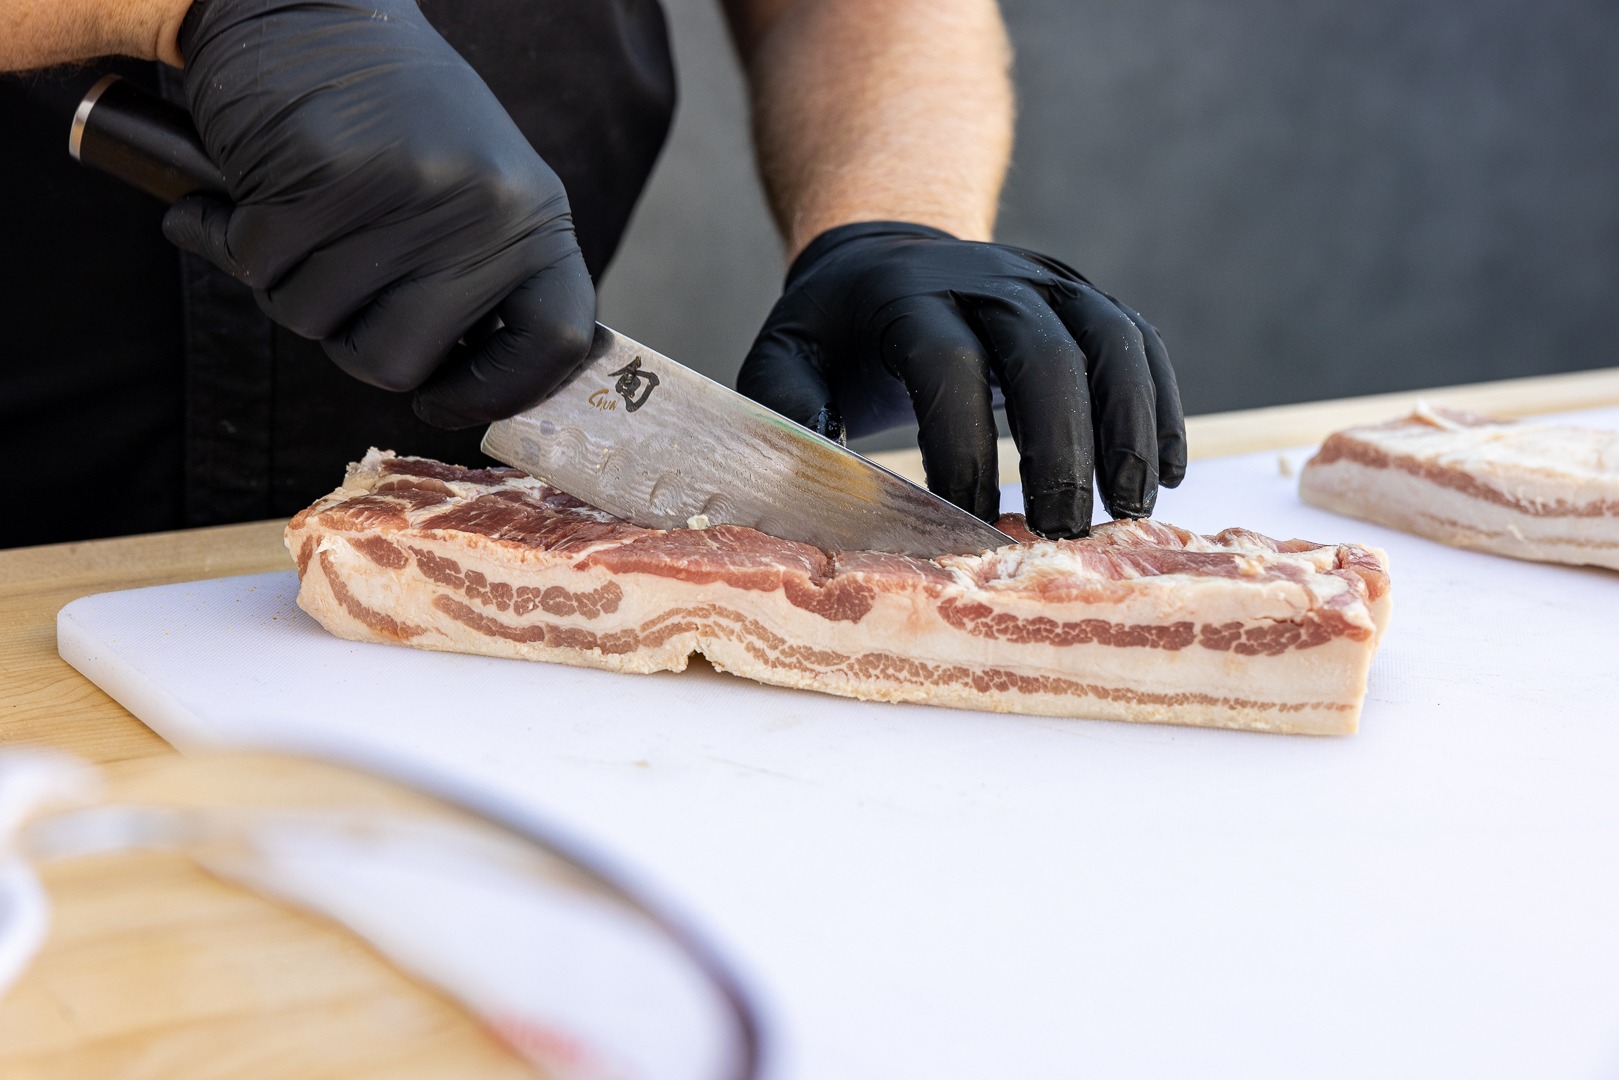 Slicing the pork belly